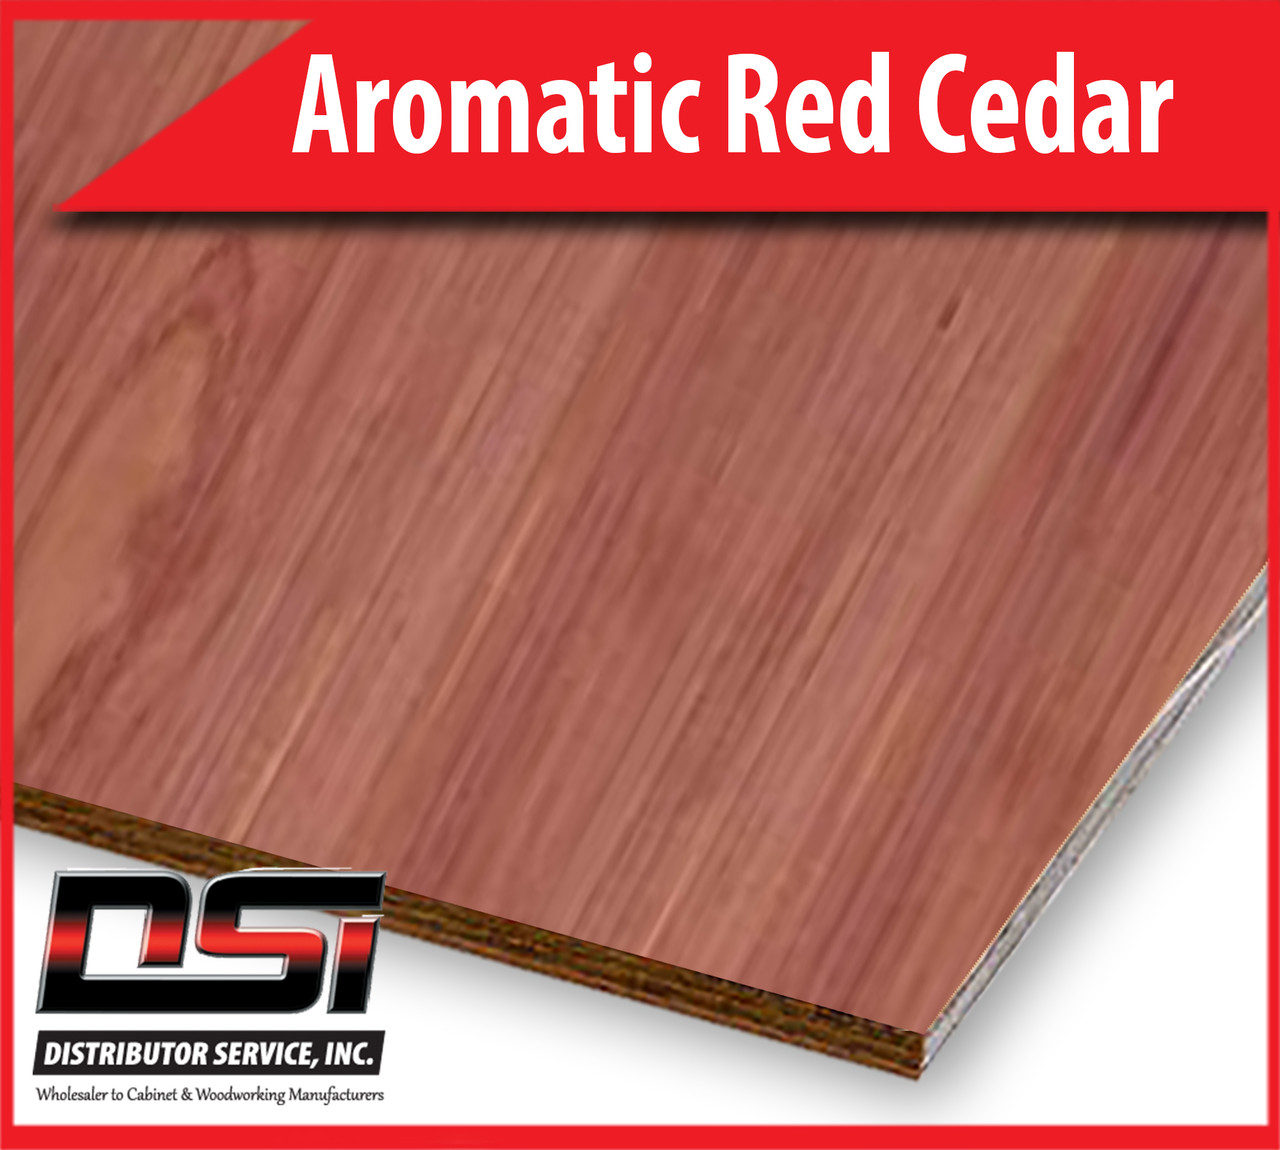 Aromatic Red Cedar Domestic Plywood Plain Sliced VC A-4 5/32" x 4x8 TP